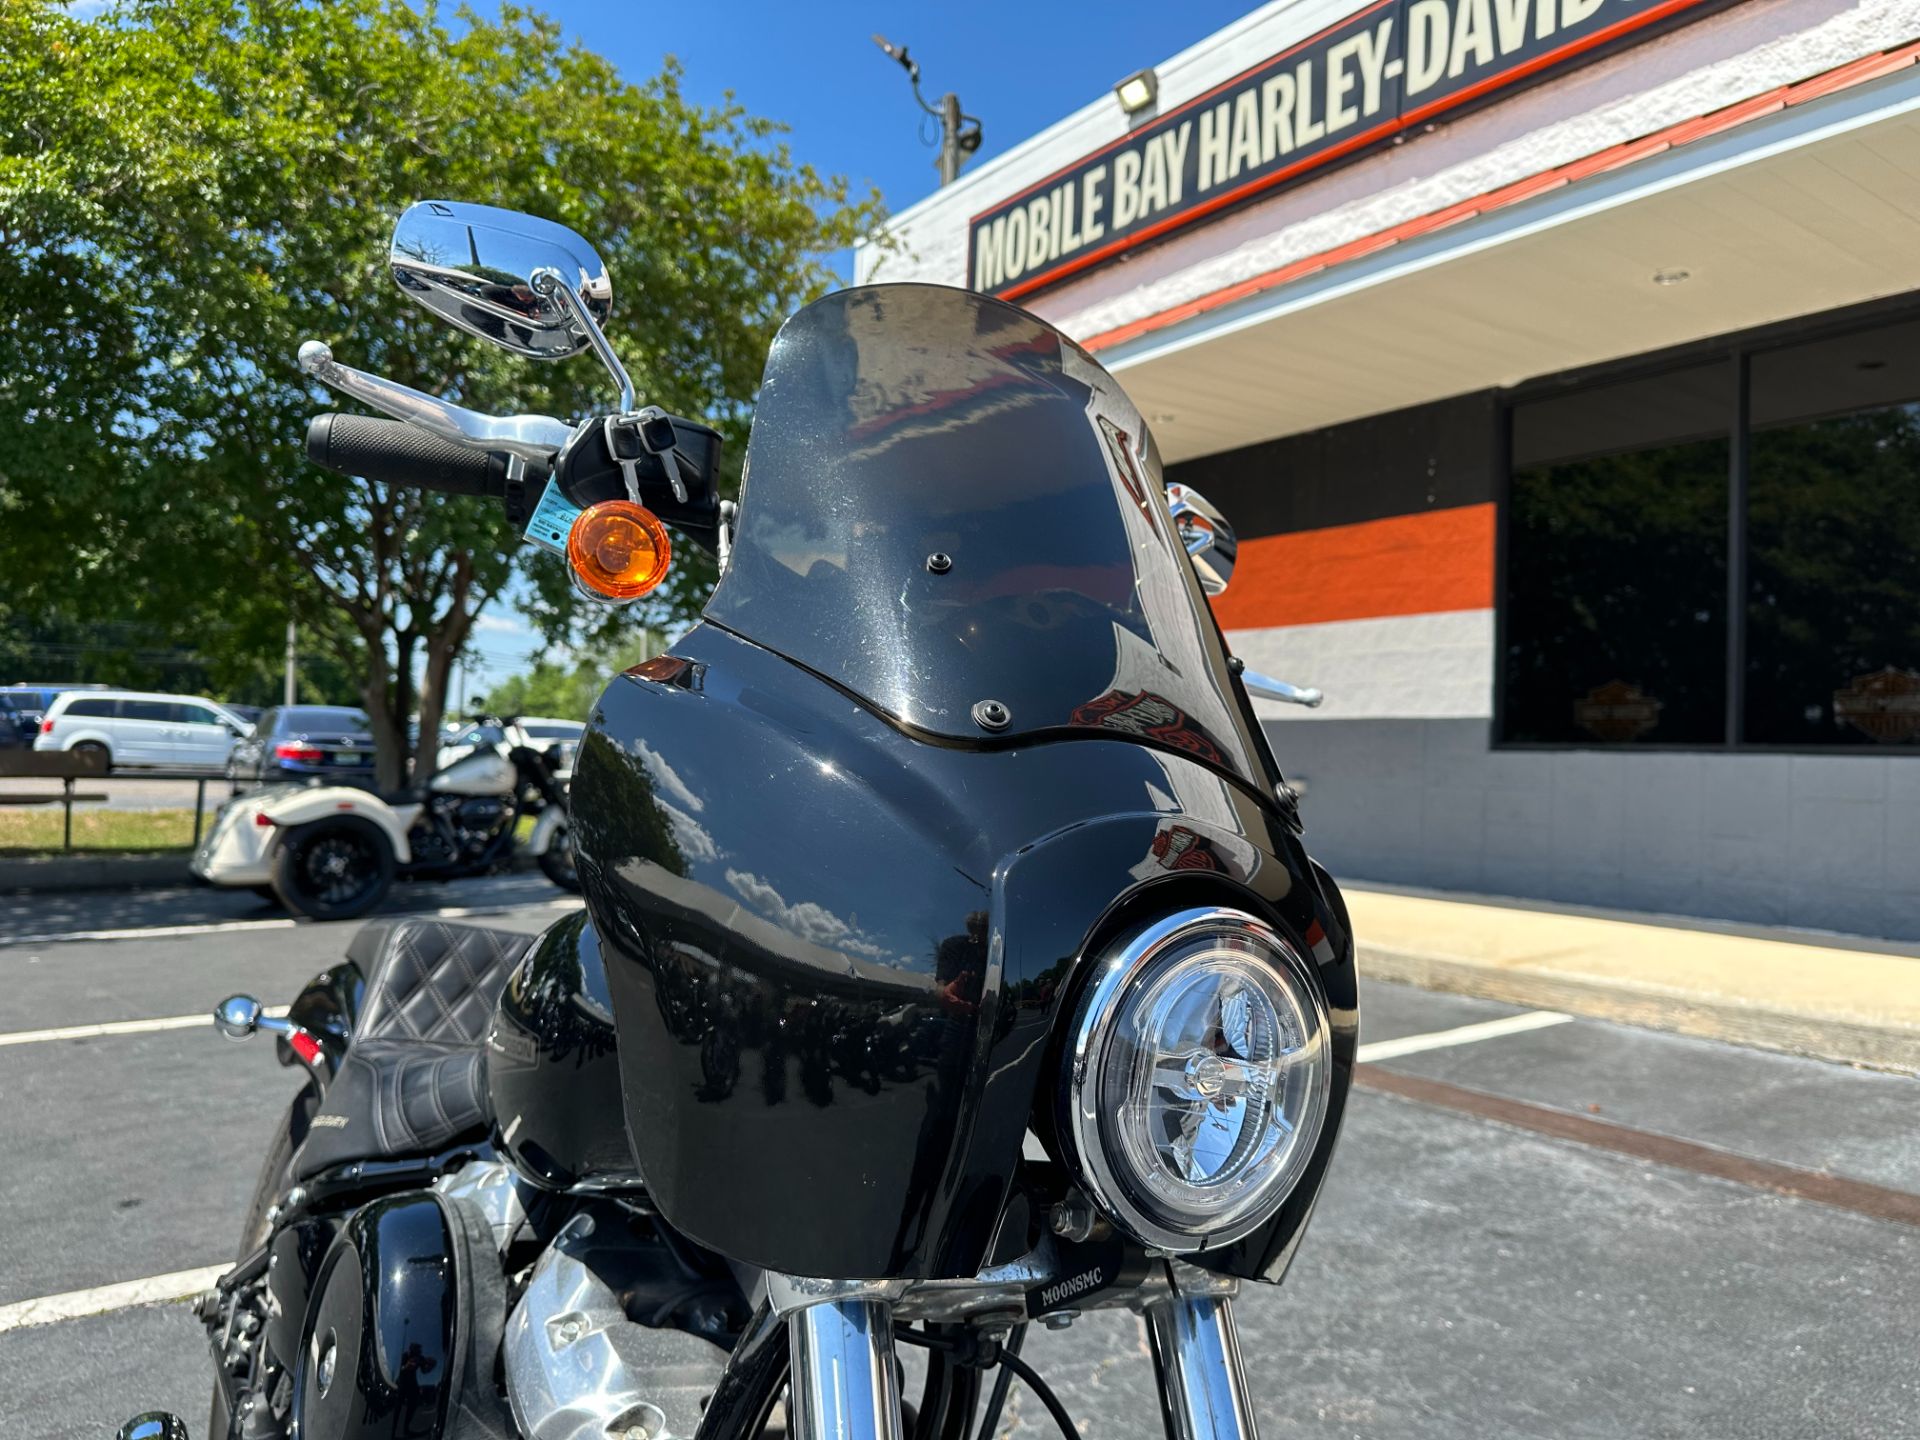 2020 Harley-Davidson Softail® Standard in Mobile, Alabama - Photo 2